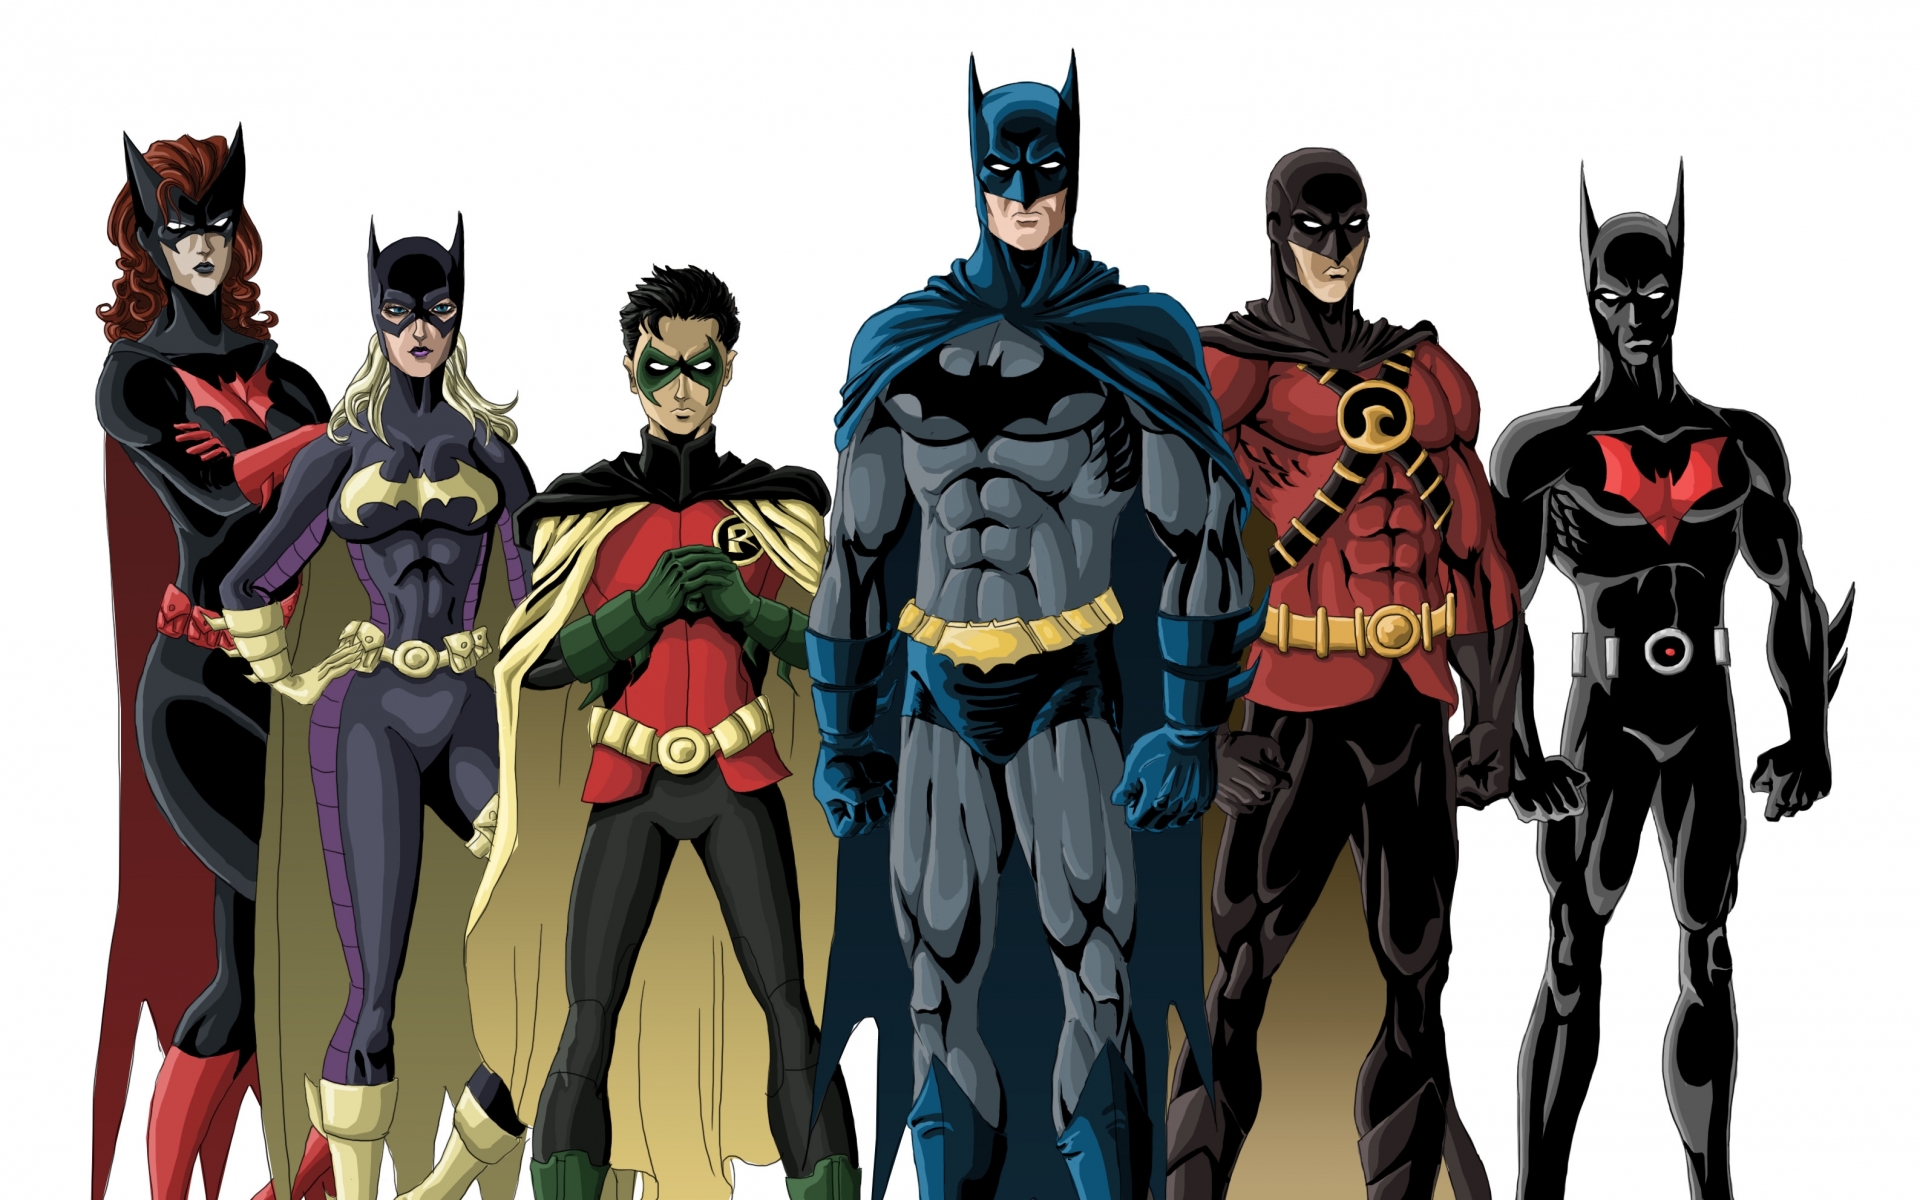  dc comics batgirl batman beyond batwoman red robin 3173x2376 wallpaper 1920x1200